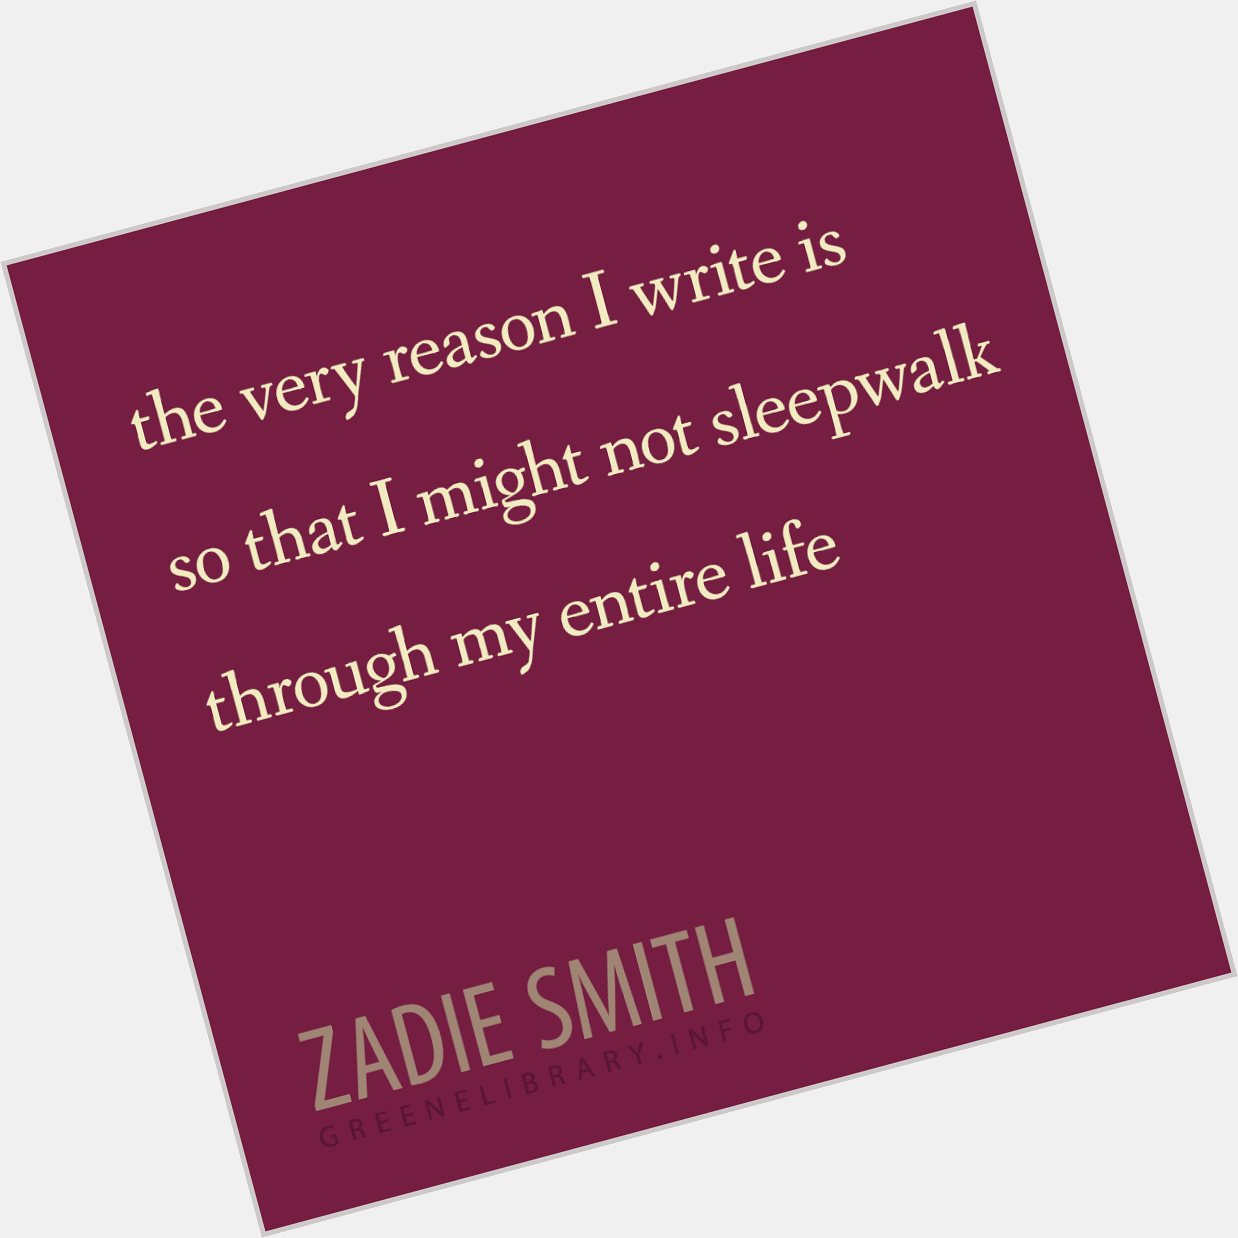 Happy birthday to author Zadie Smith. 